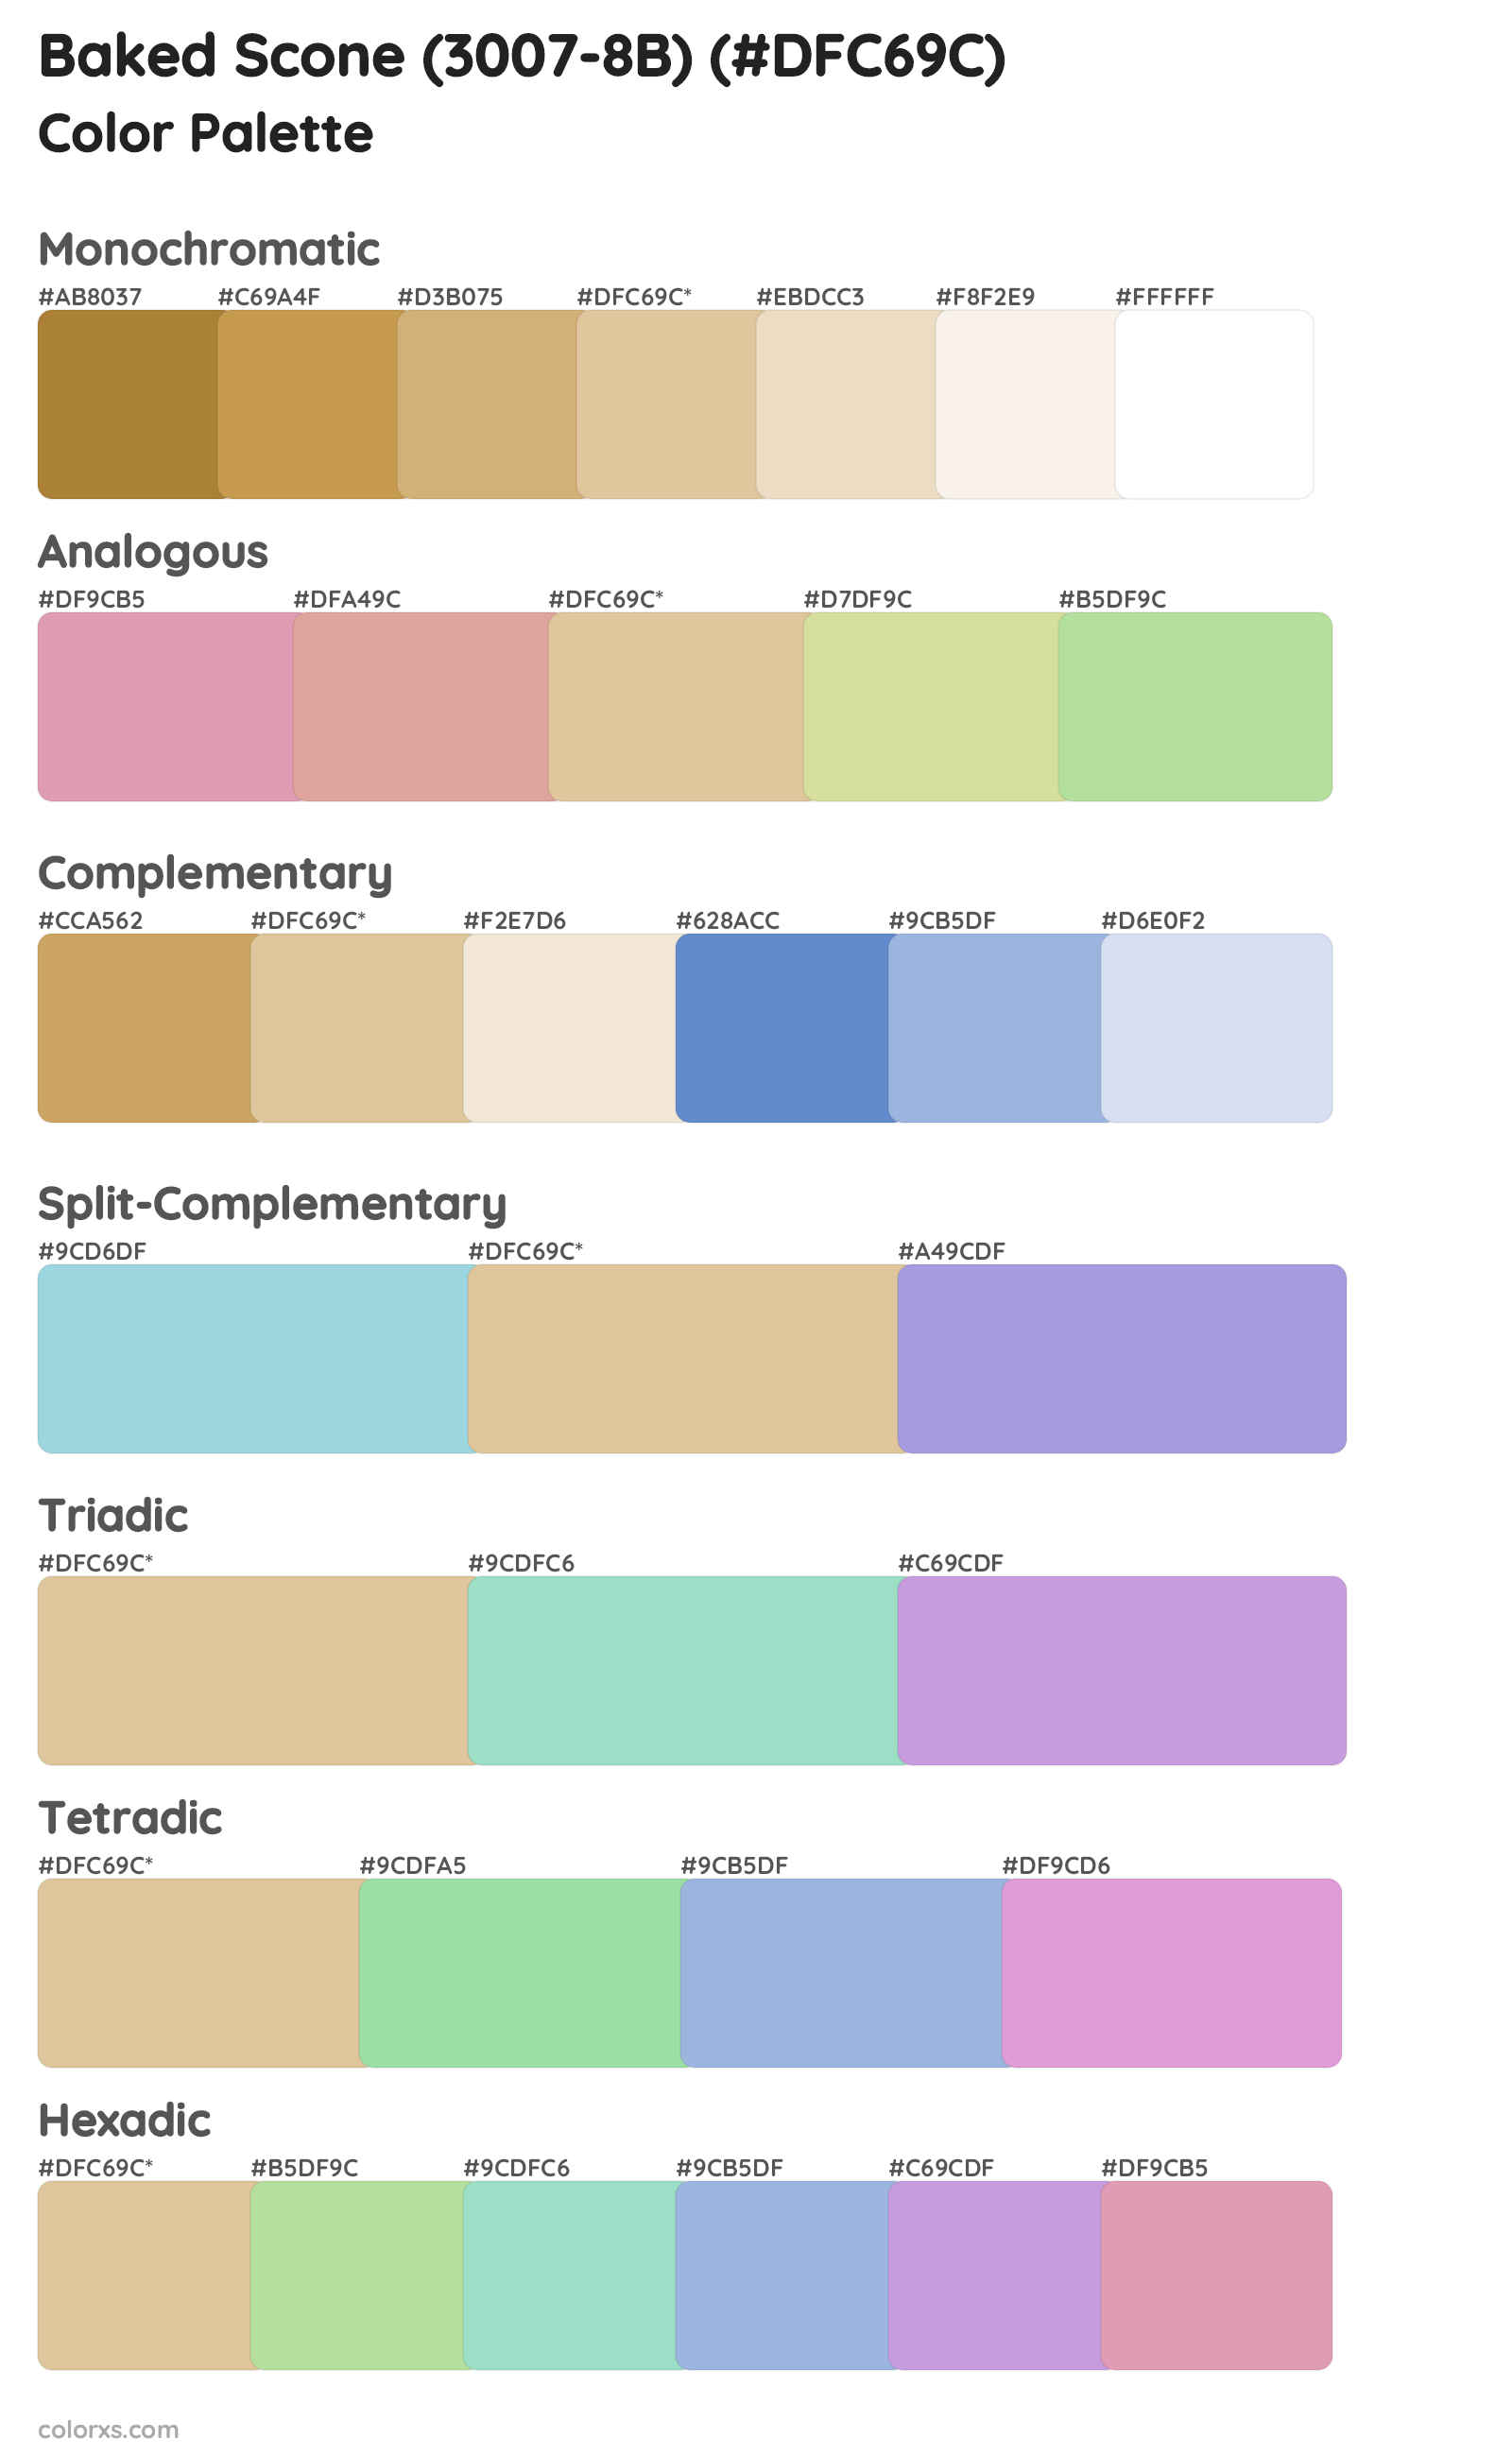 Baked Scone (3007-8B) Color Scheme Palettes